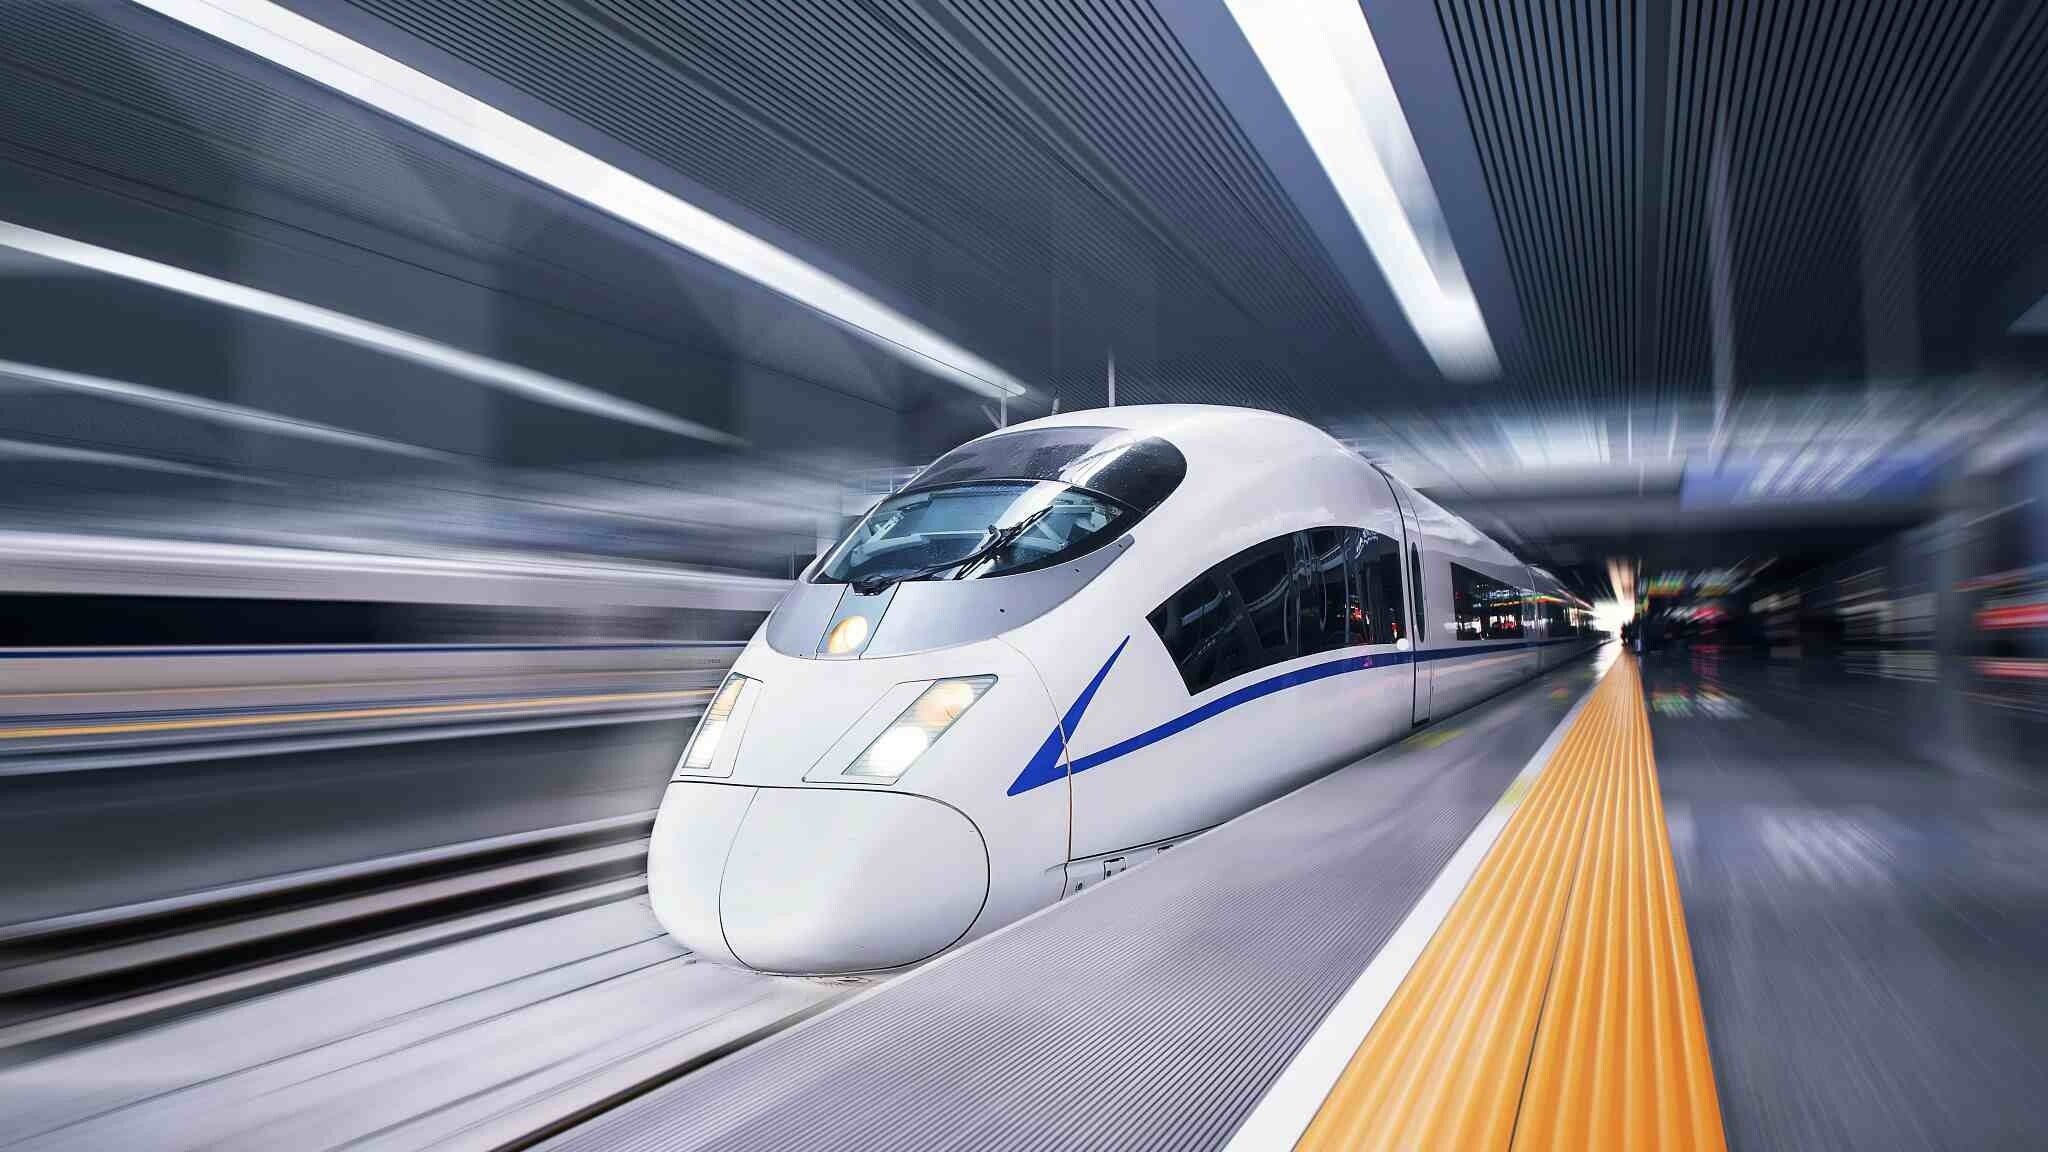 Bullet Train, High-speed rail innovation, China vs Western model, CGTN analysis, 2050x1160 HD Desktop